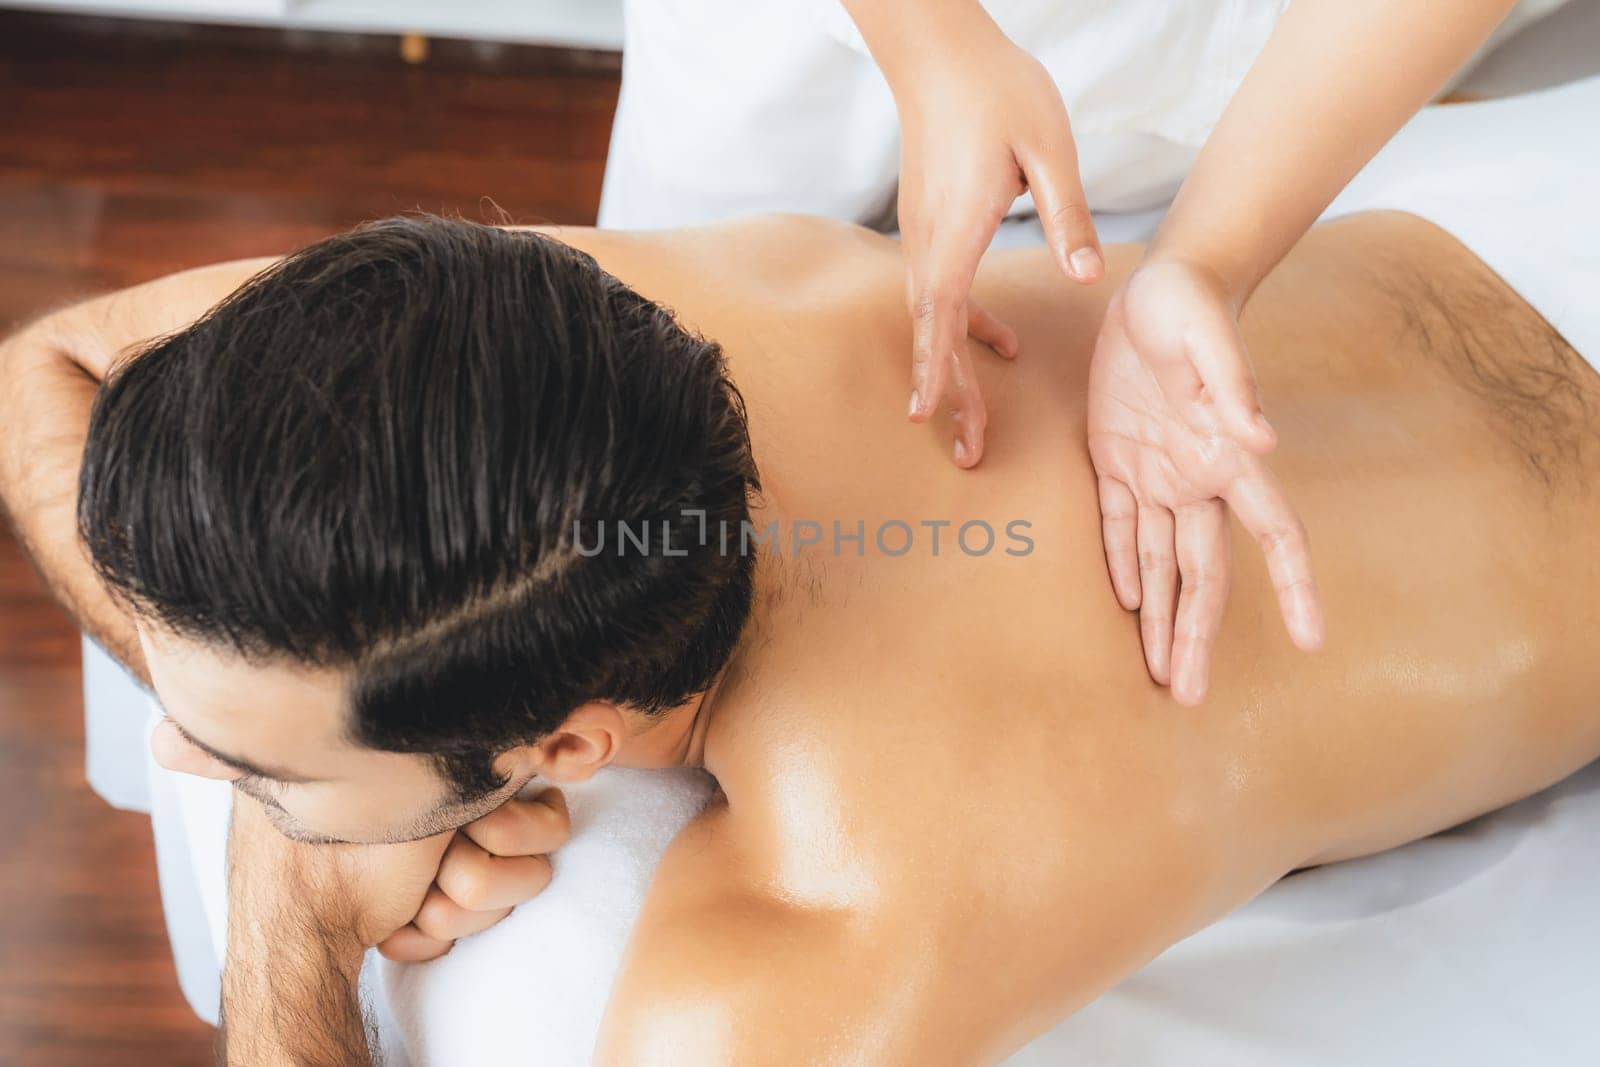 Caucasian man customer enjoying relaxing anti-stress massage. Quiescent by biancoblue